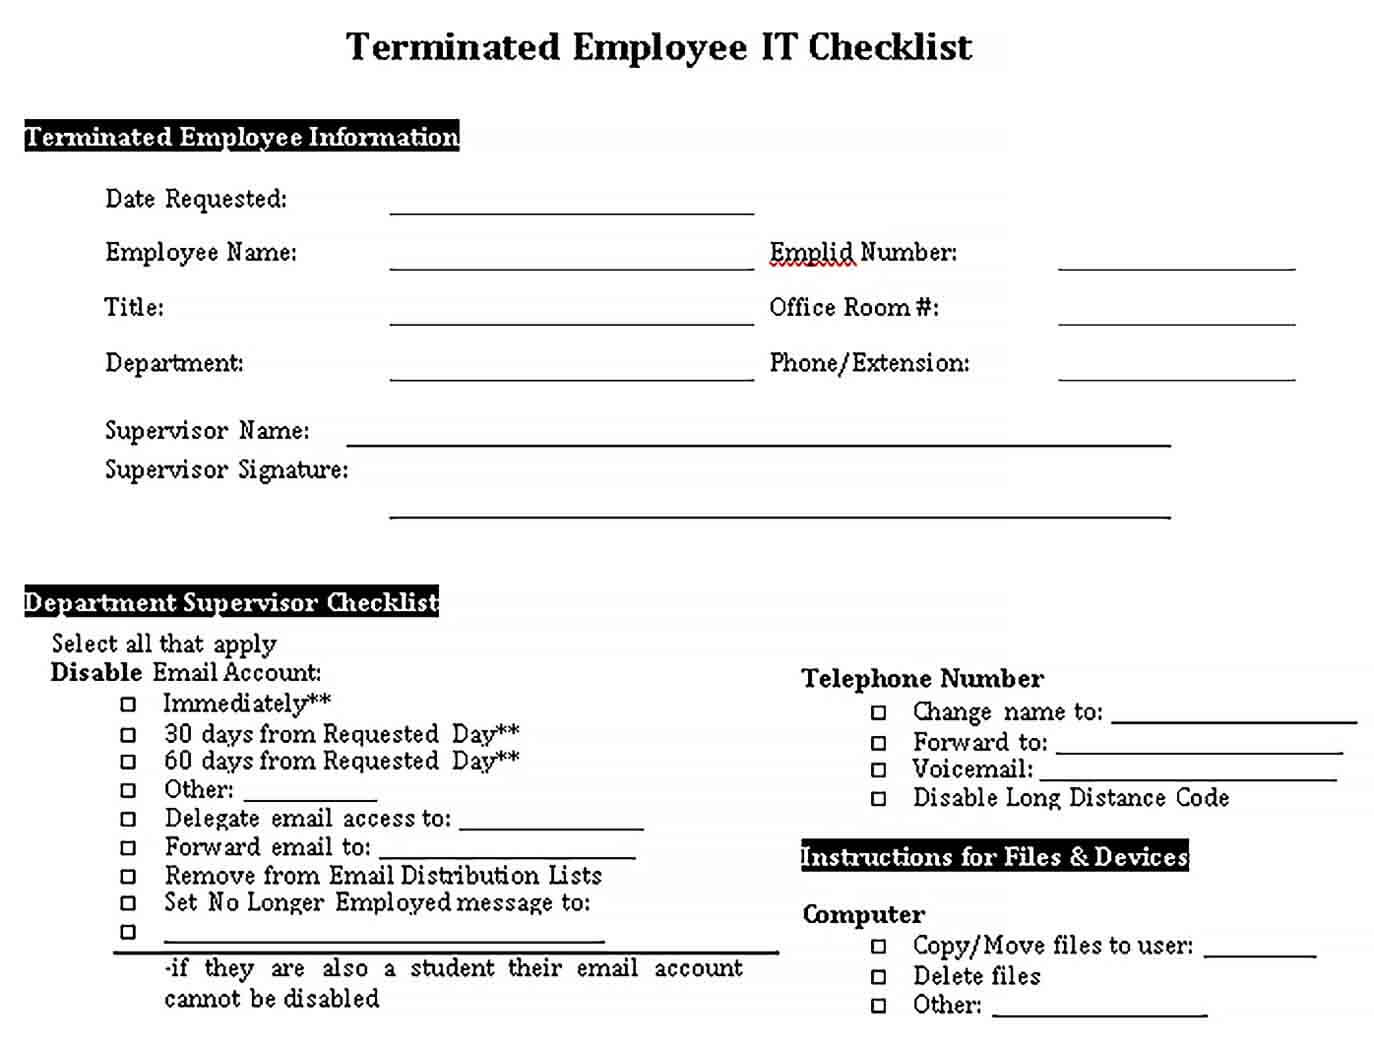 Sample Terminated Employee Checklist